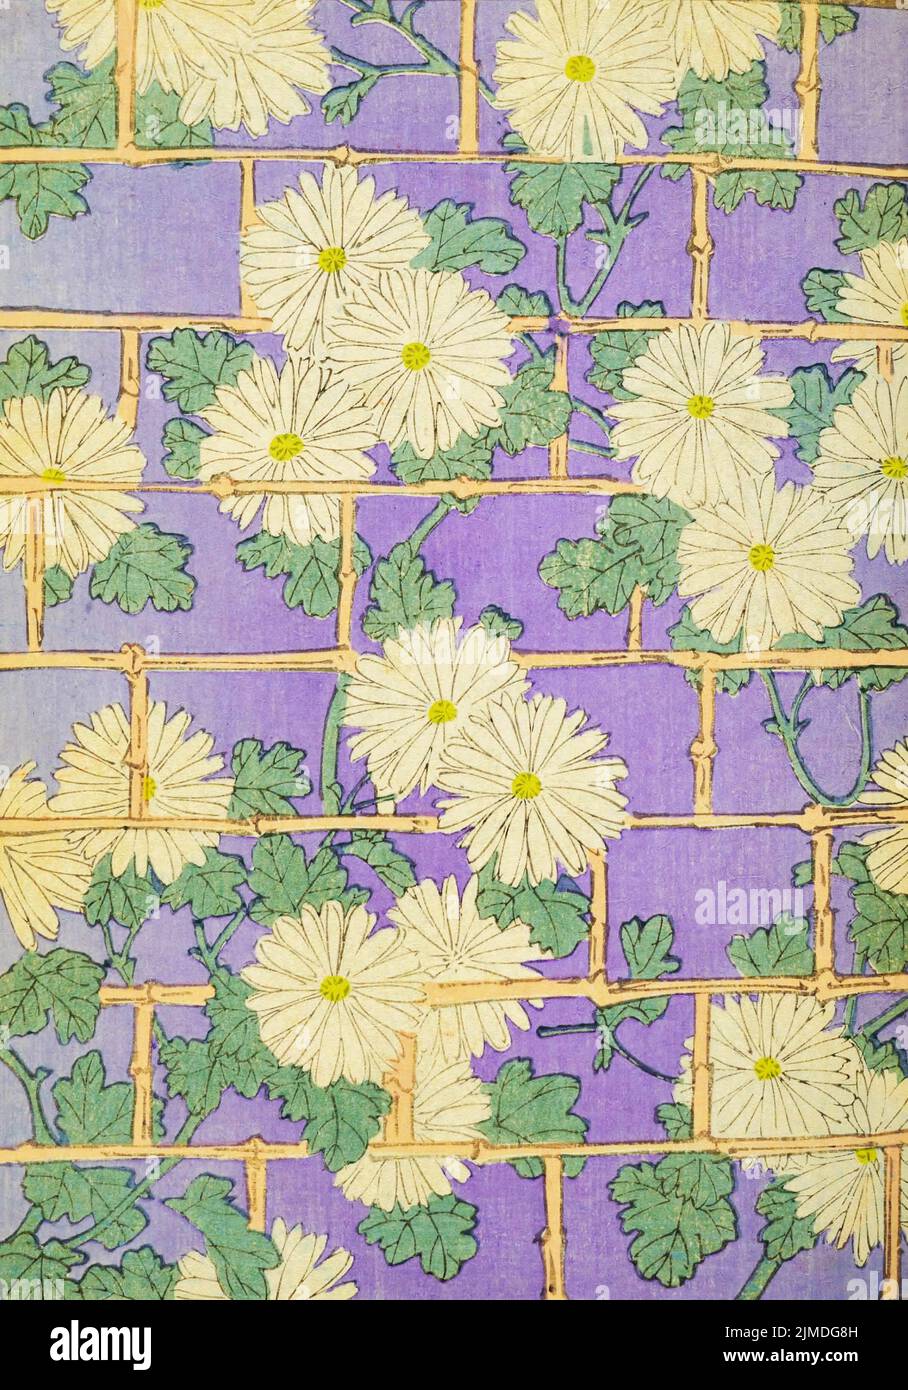 Retro Japanese art design purple background with lattice and flowers Stock Photo